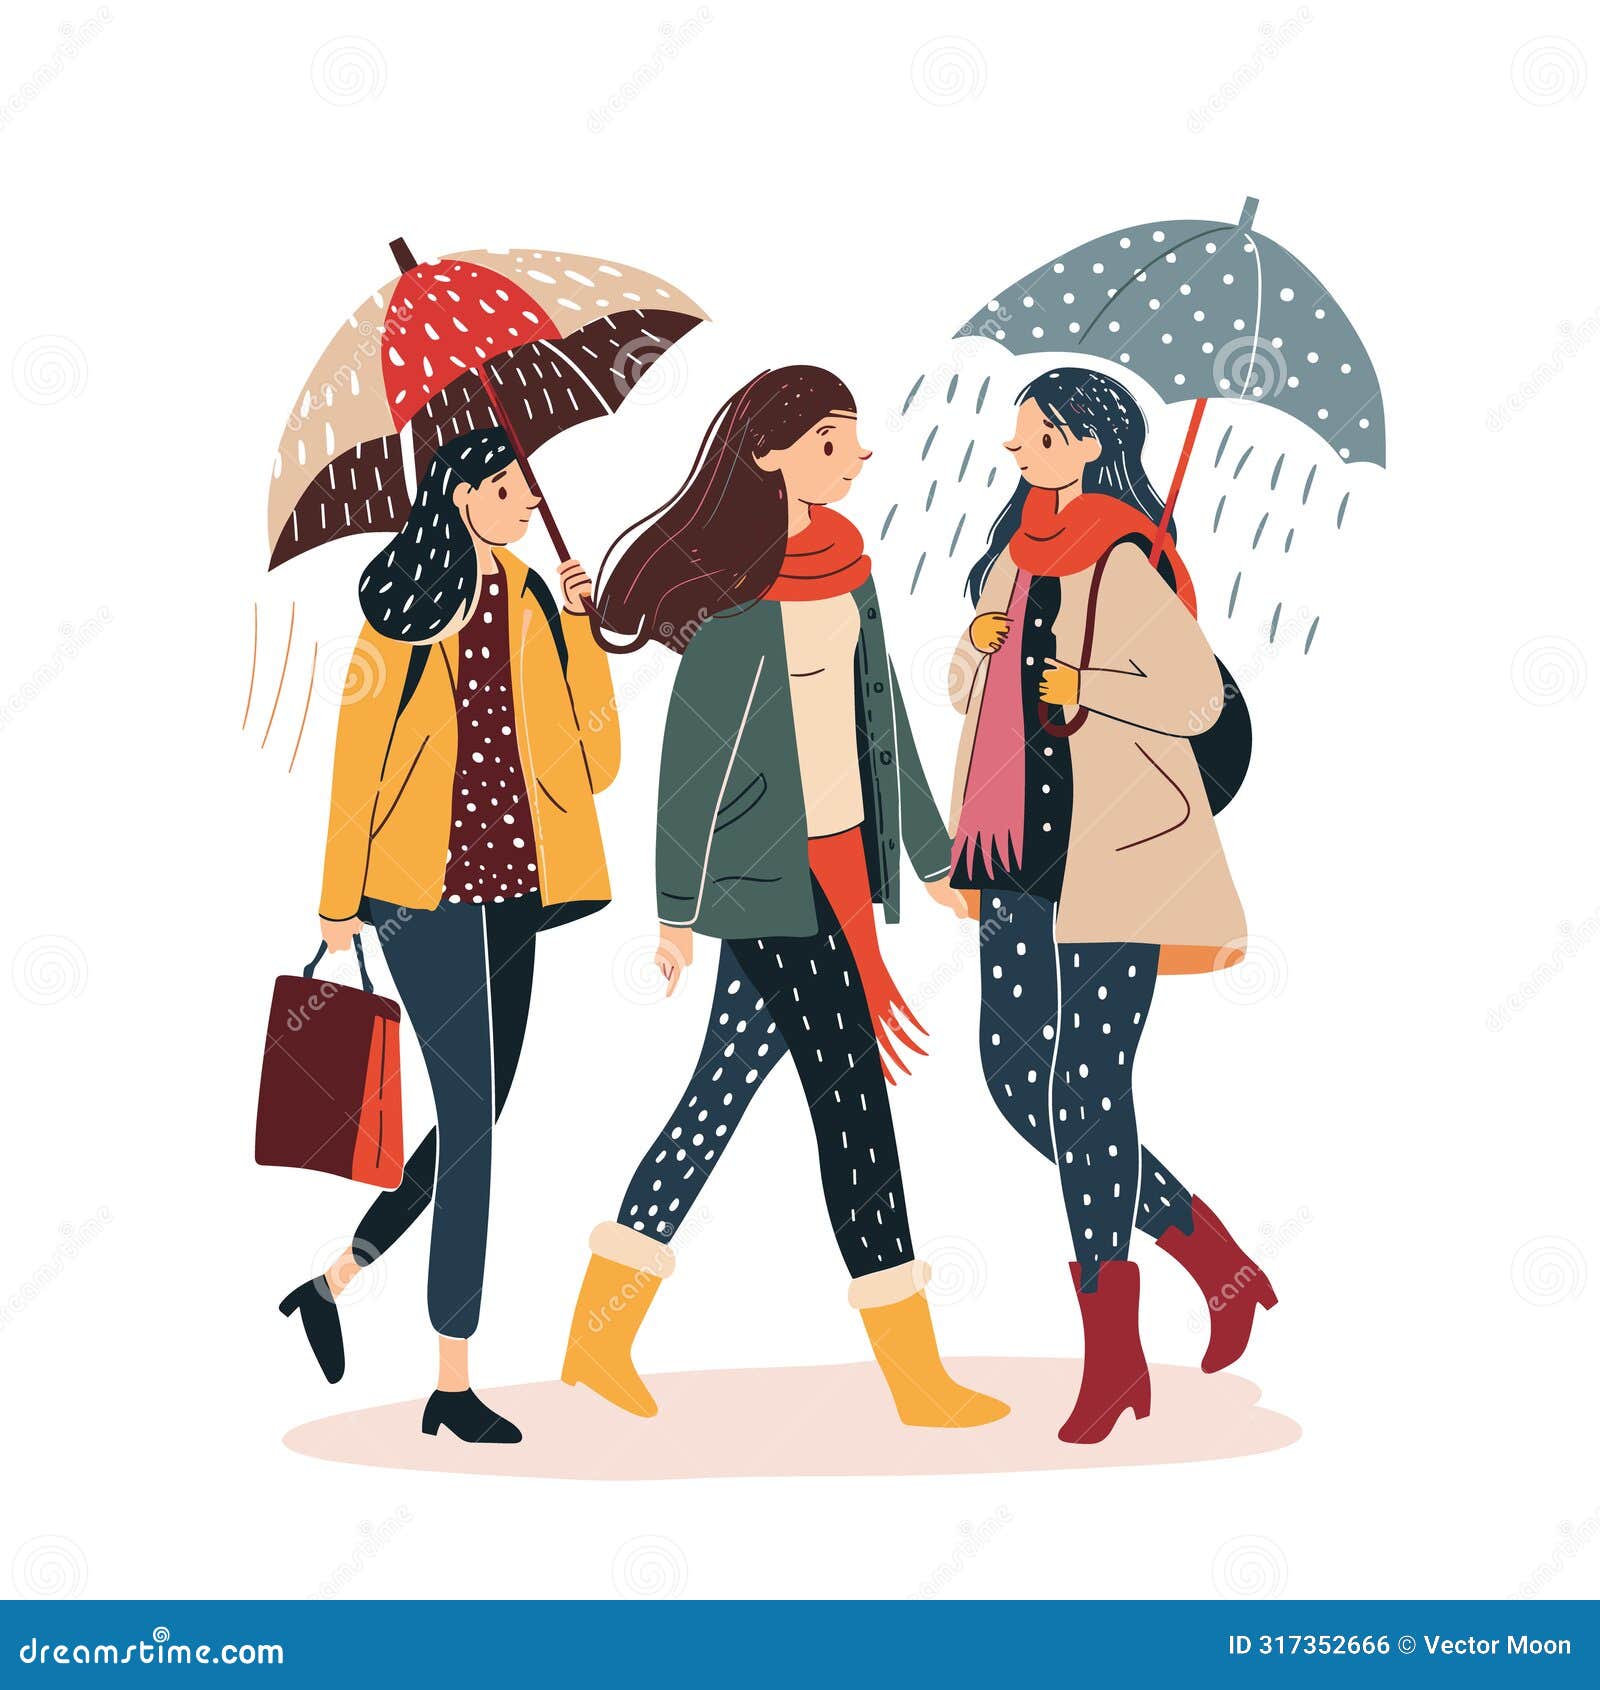 three women walk together during rainfall, two holding umbrellas, wearing stylish rainwear boots